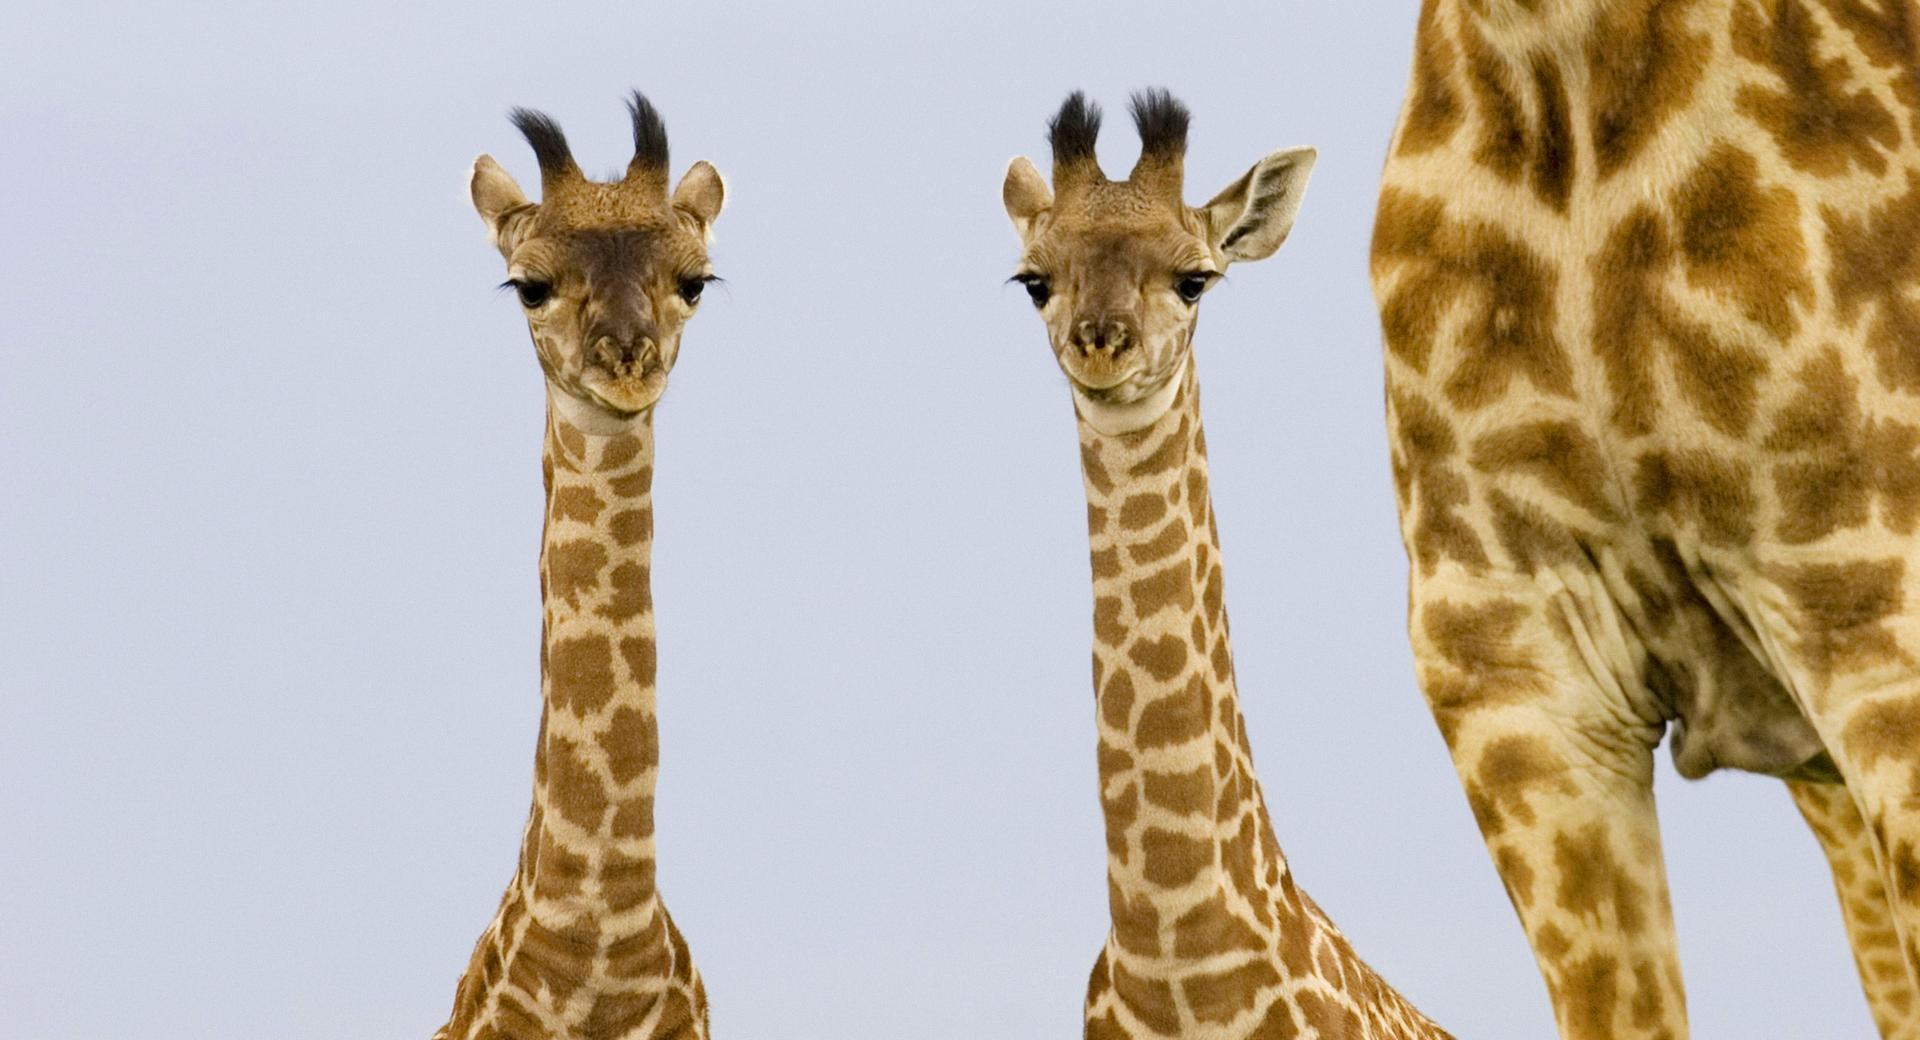 Two Newborn Giraffe Masai Mara Kenya at 1024 x 1024 iPad size wallpapers HD quality